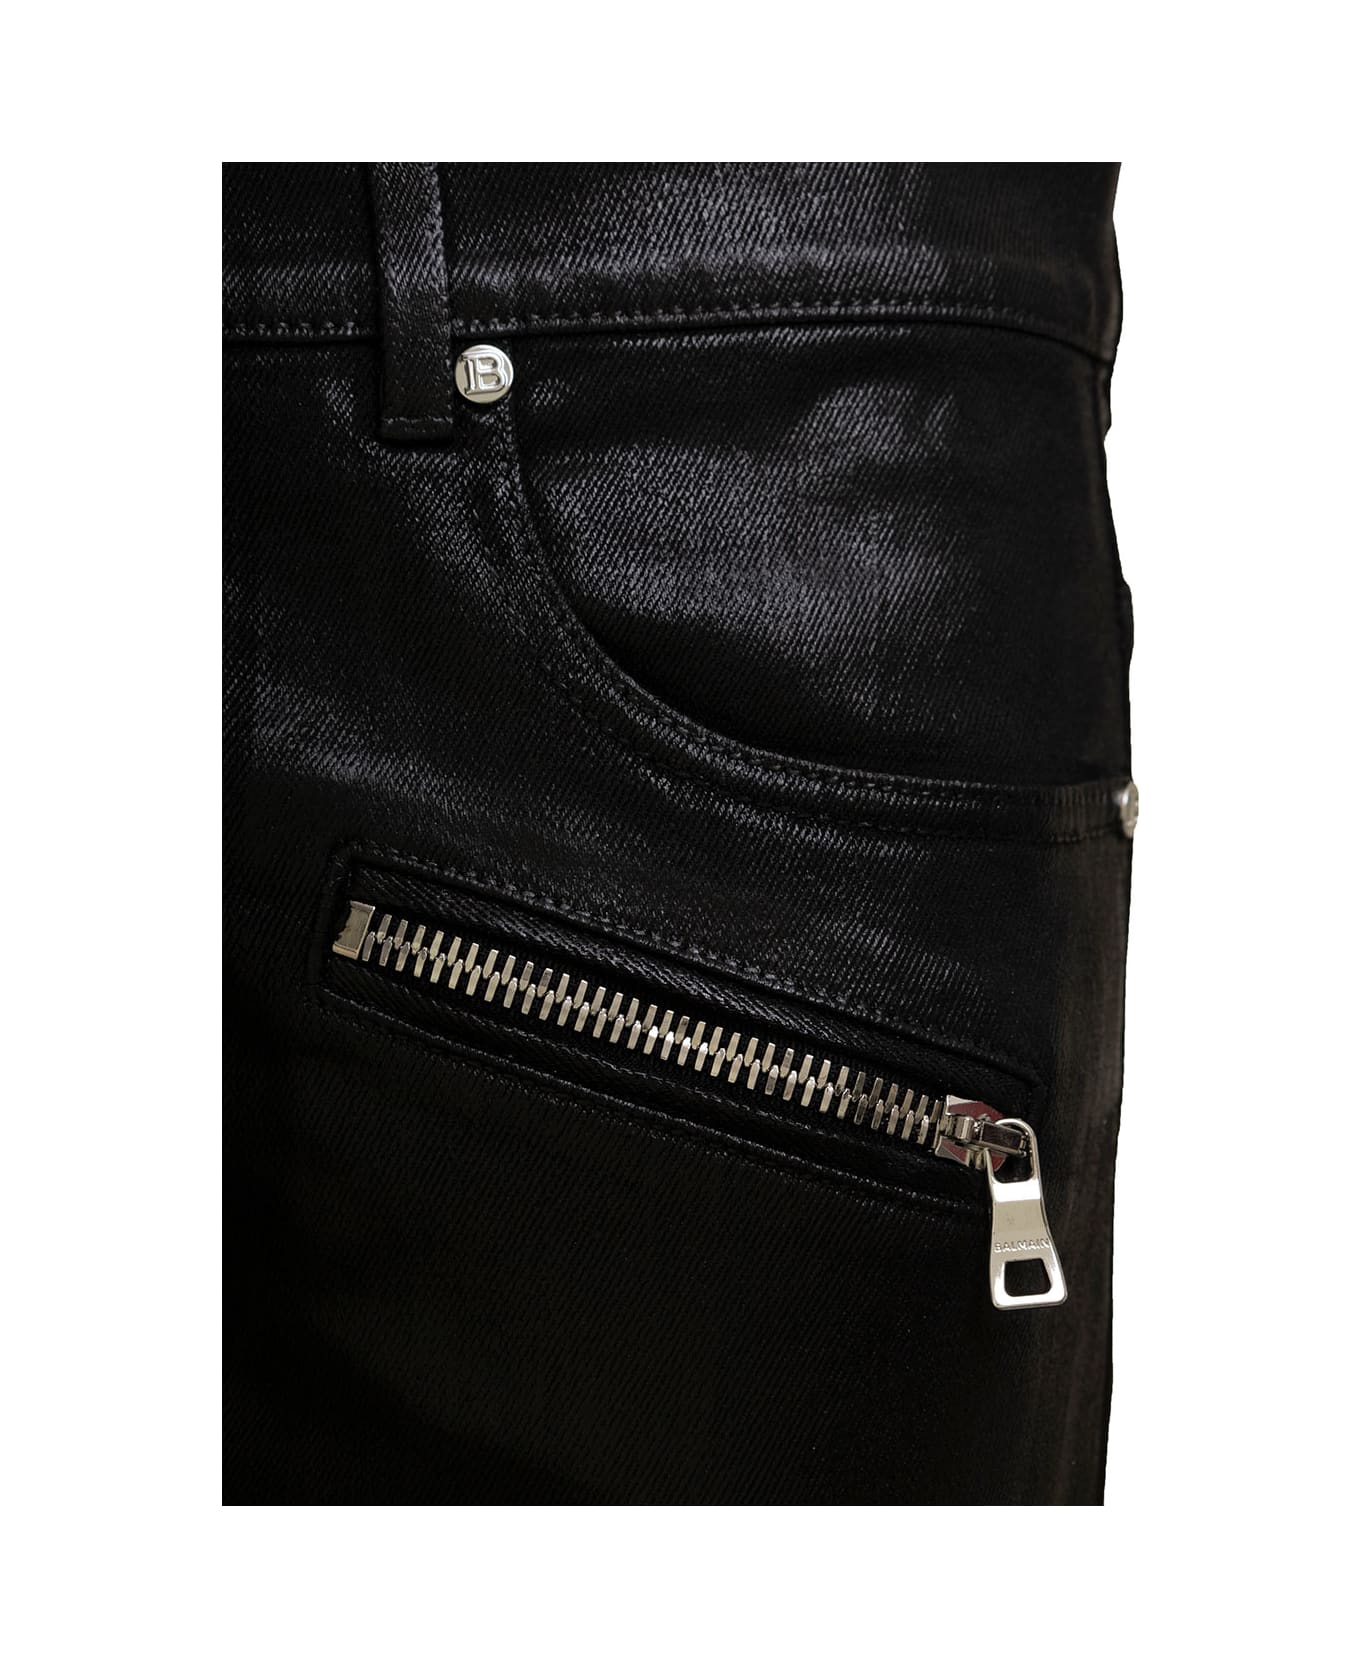 Balmain Man's Slim Fit Black Coated Fabric Jeans - Black